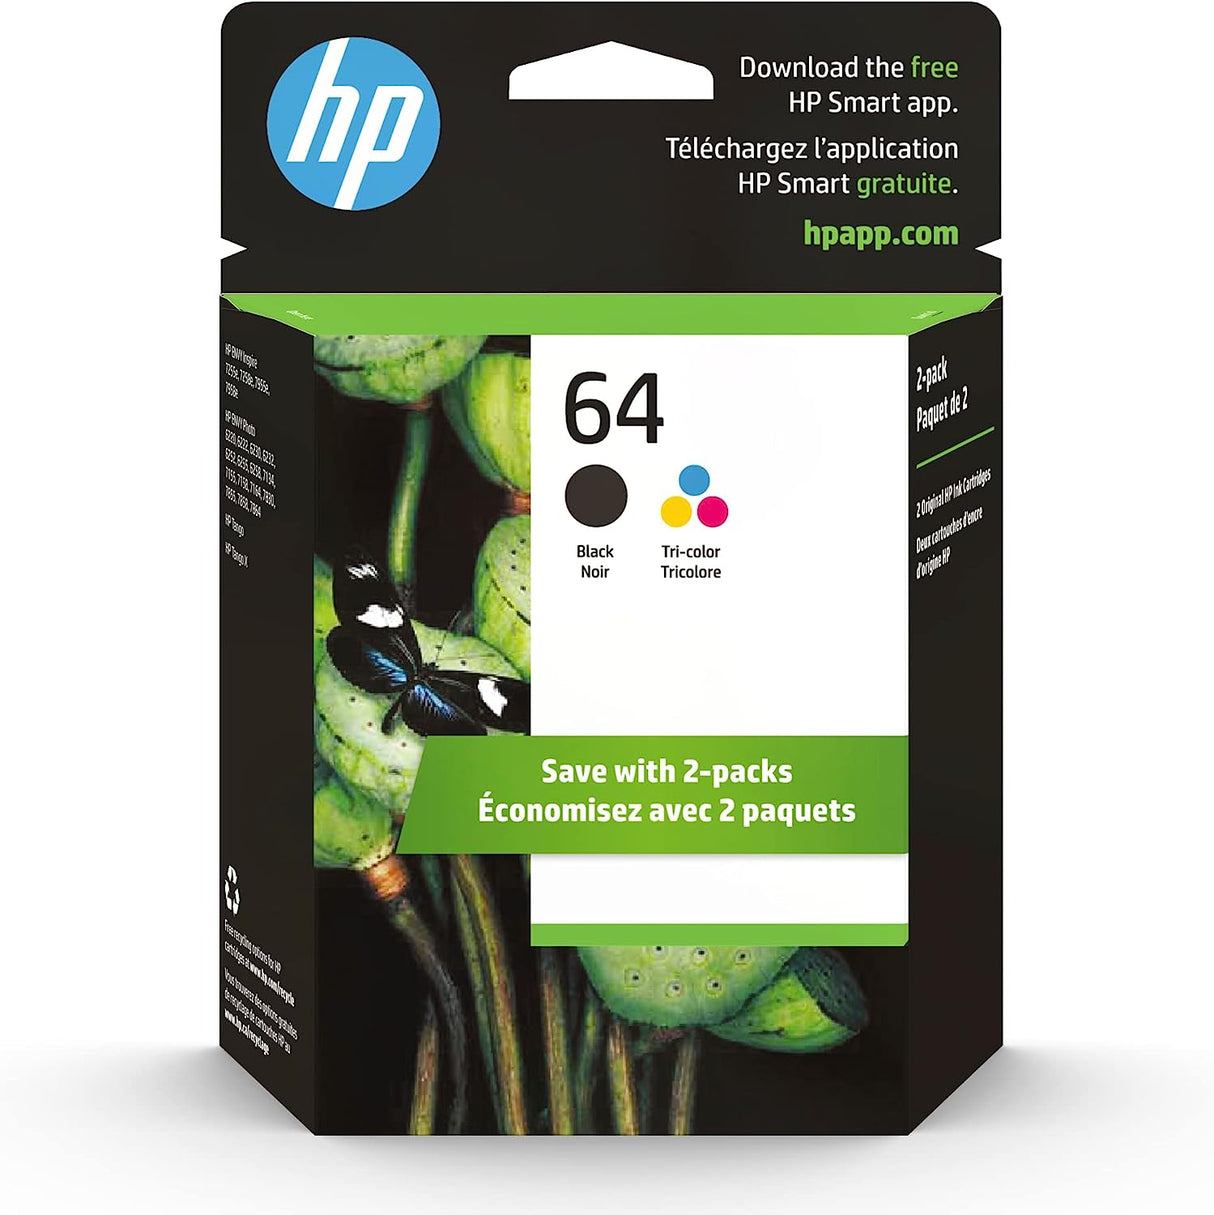 HP 64 Black/Tri-color Ink Cartridges (2-pack)